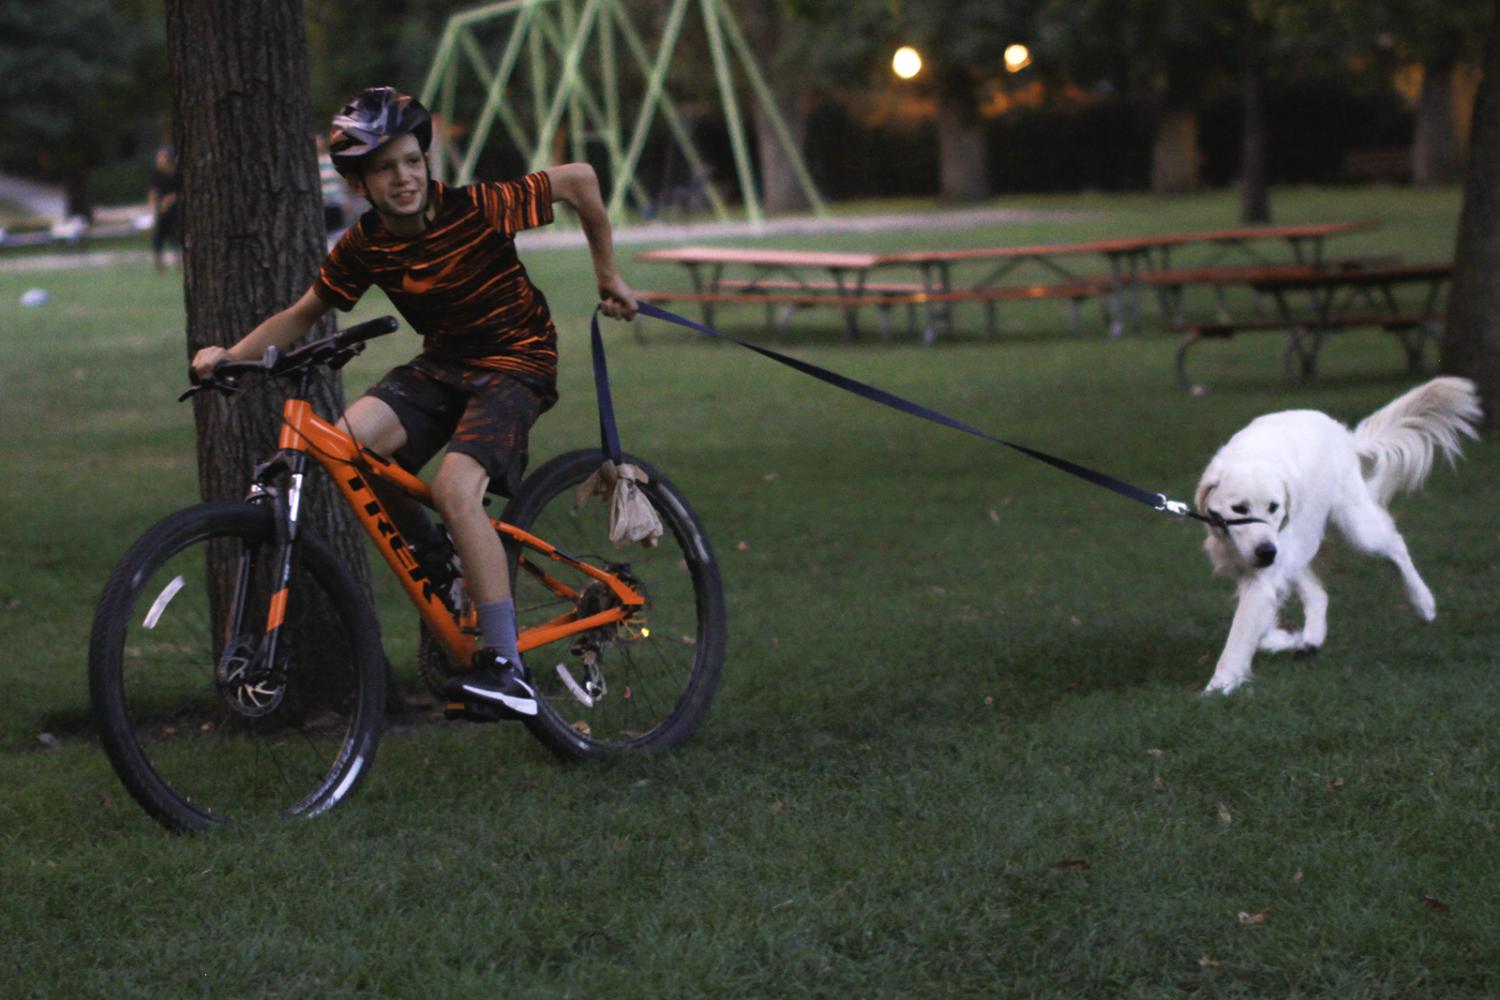 Petr Paulson training his dog Misha how to run alongside him on his bike Aug. 30.